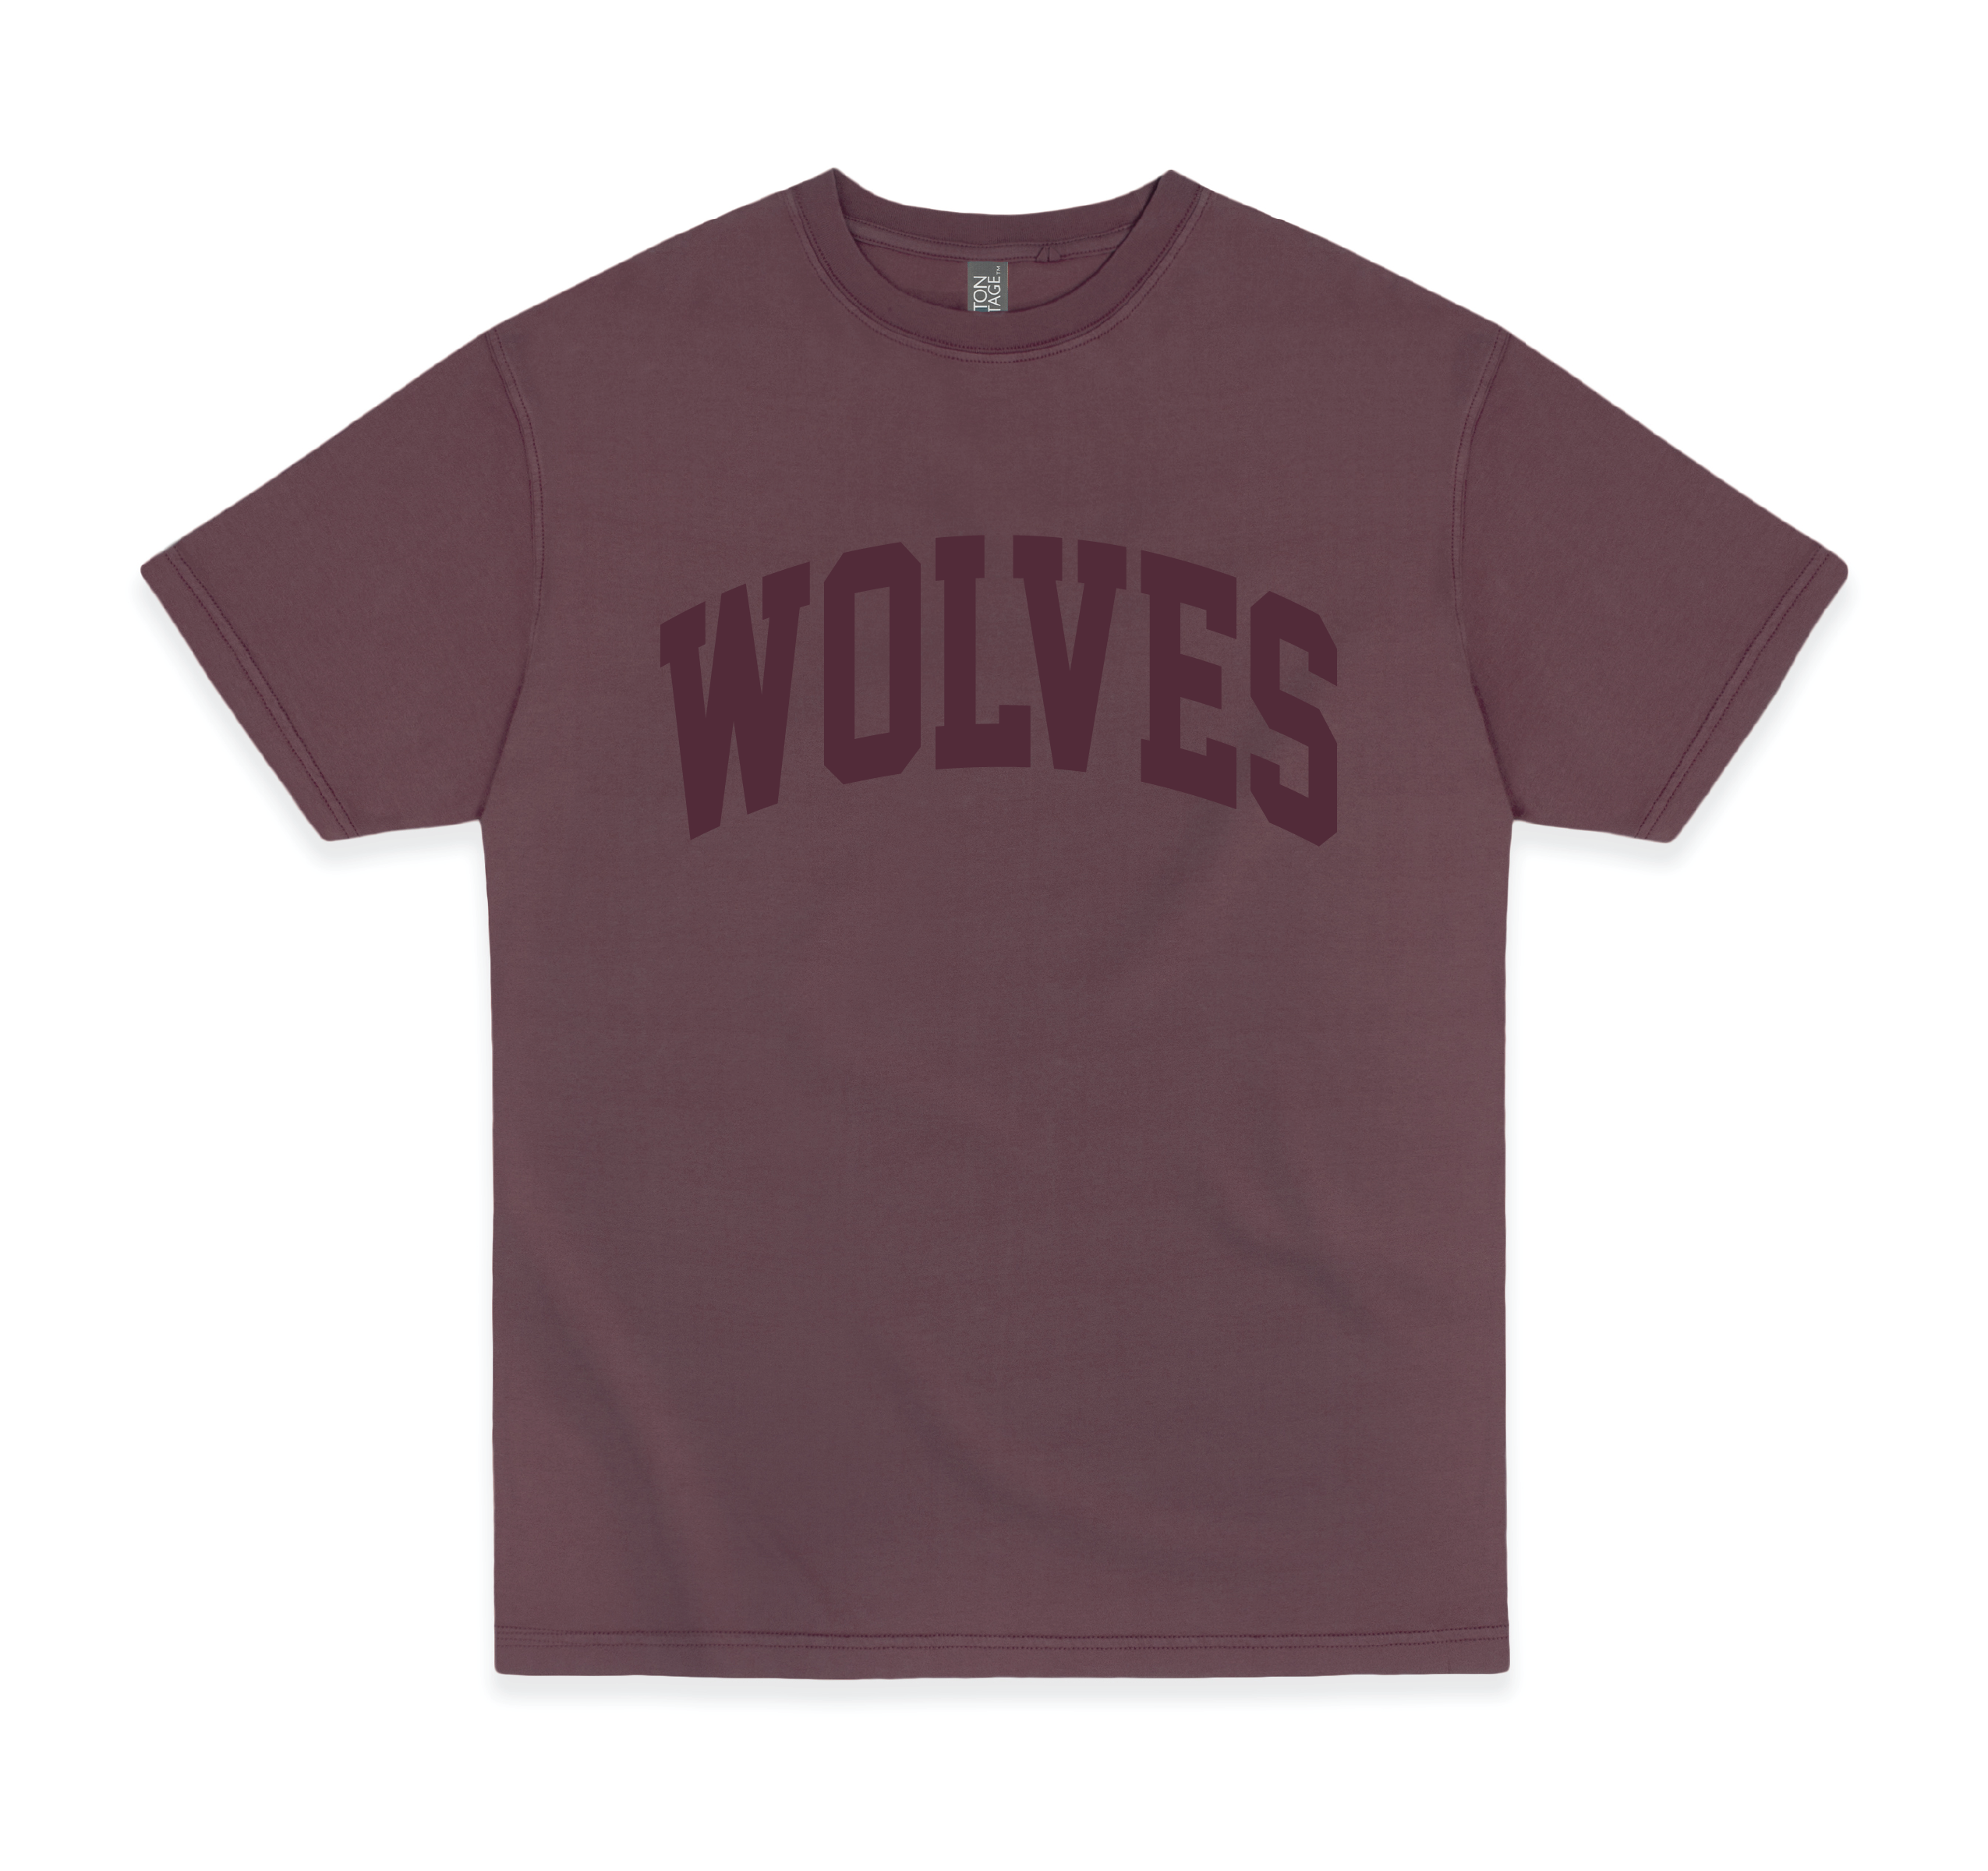 Wolves Collegiate Tee